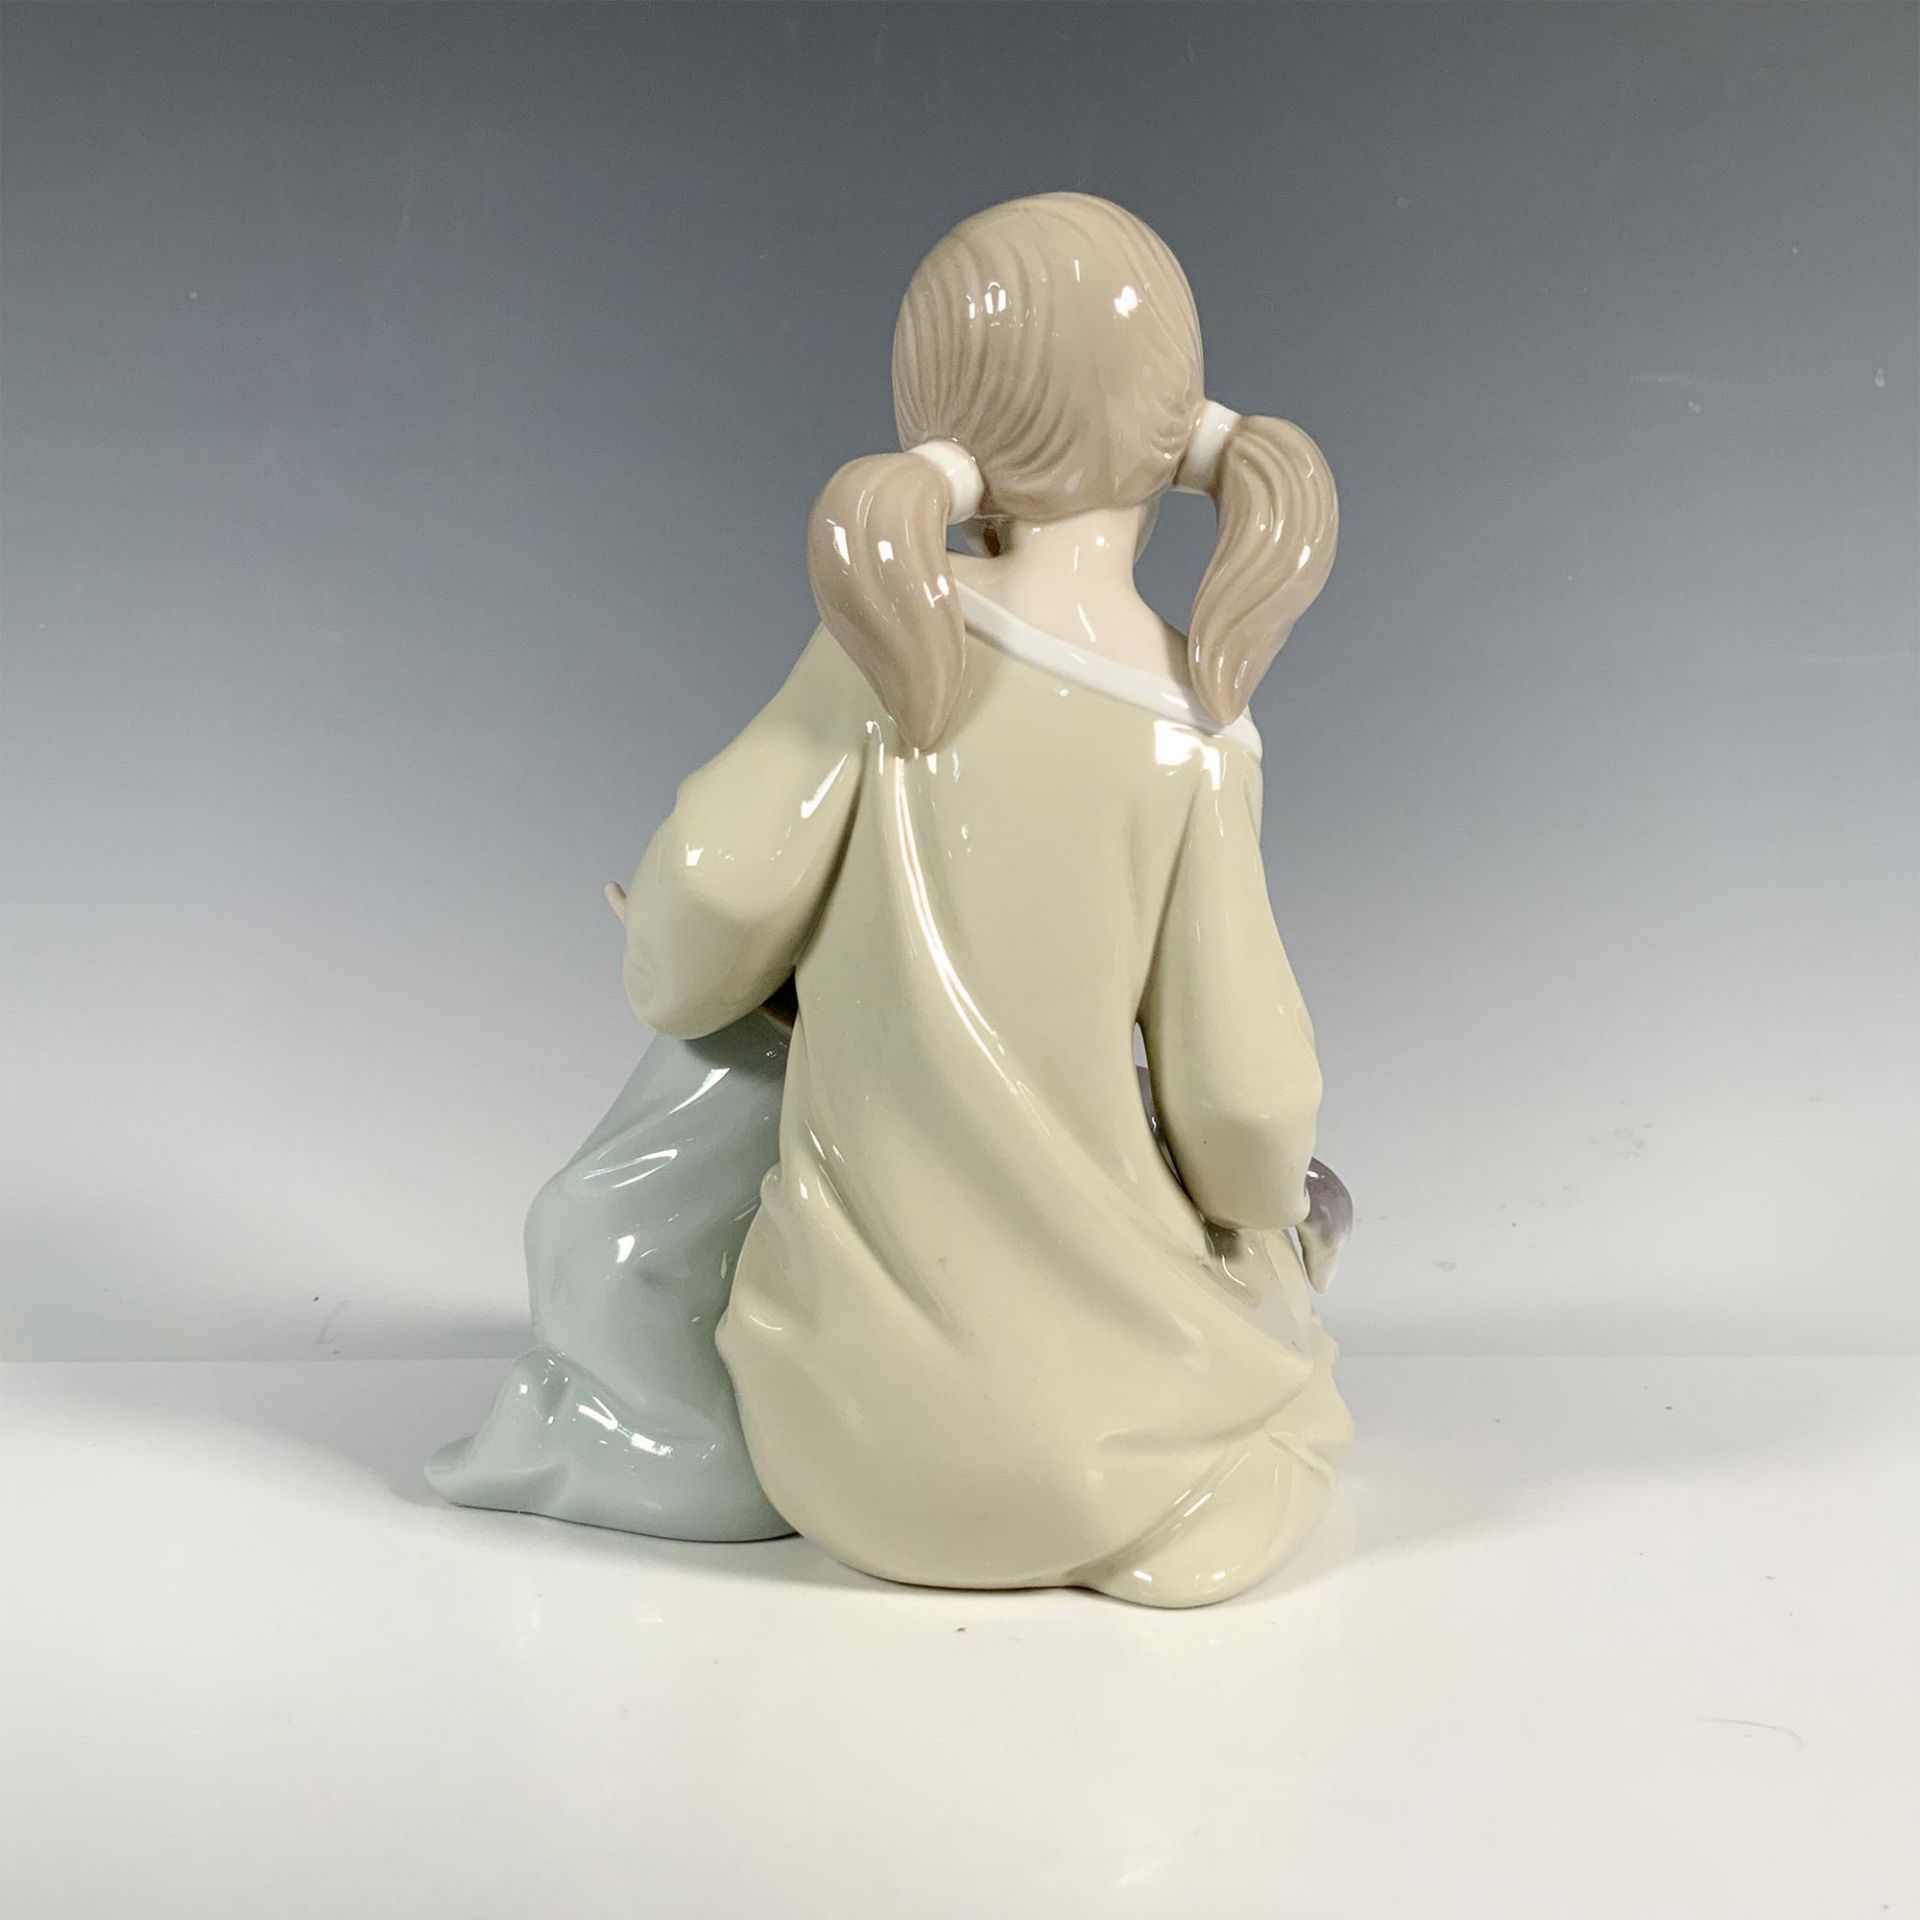 Little Sister 1001534 - Lladro Porcelain Figurine - Image 2 of 4